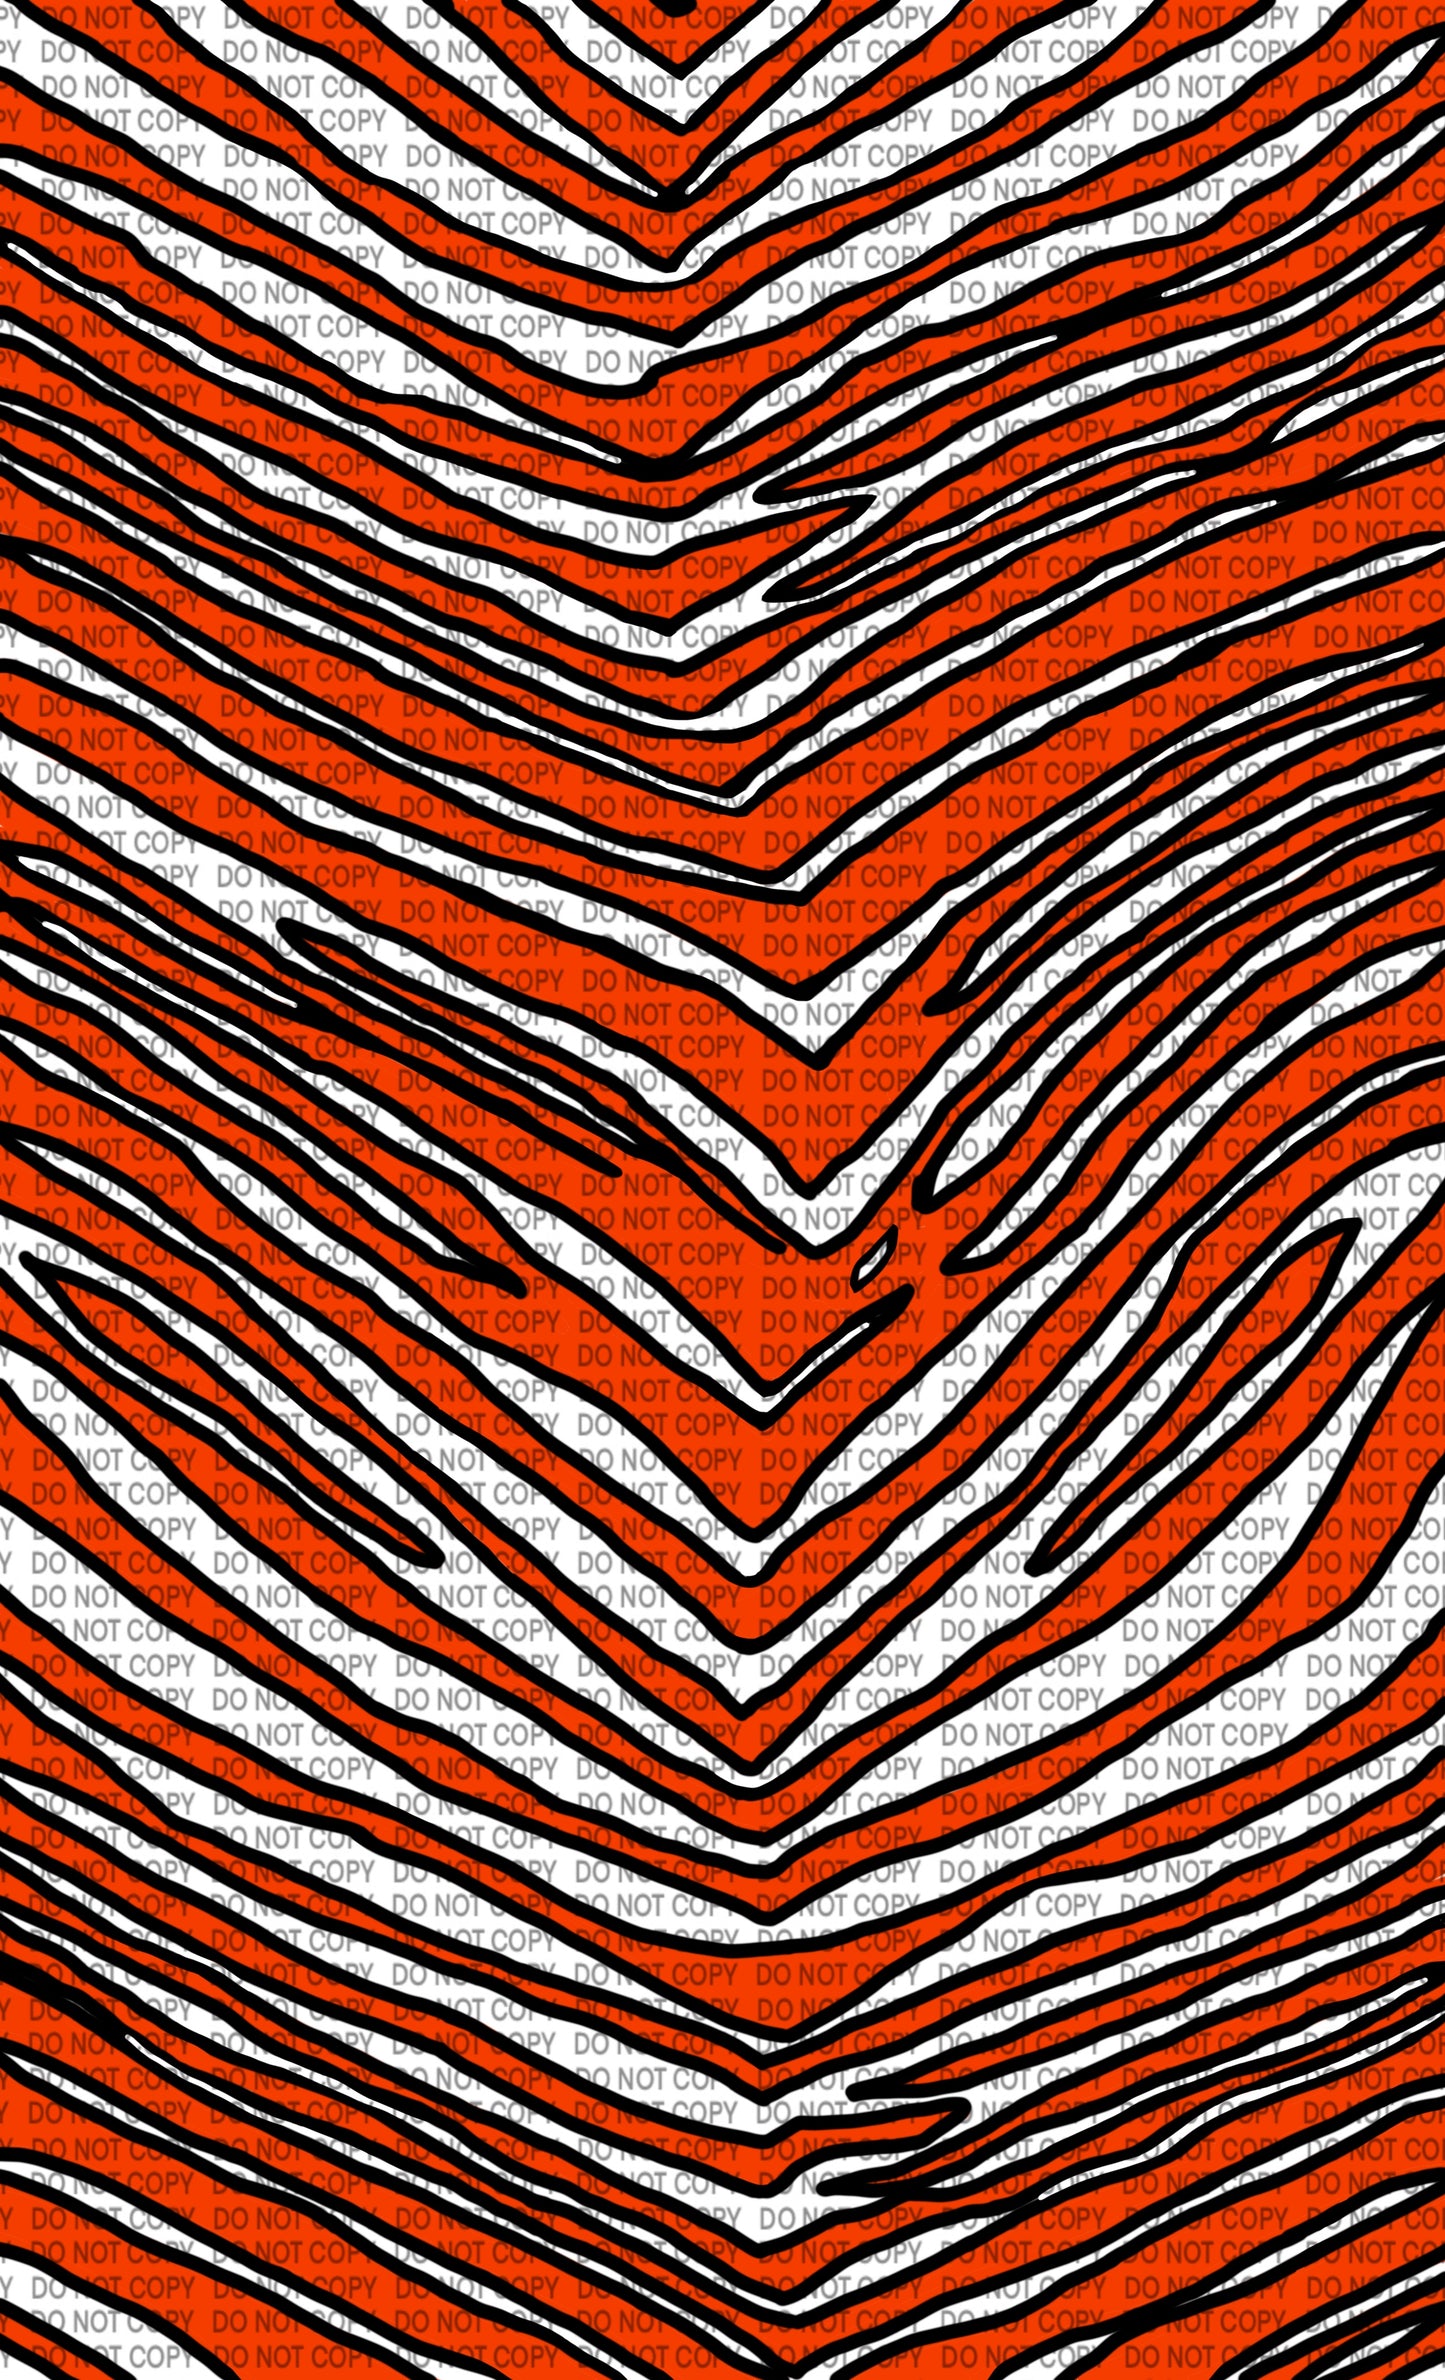 Zebra Sheet Not Seamless Orange and Black: PNG